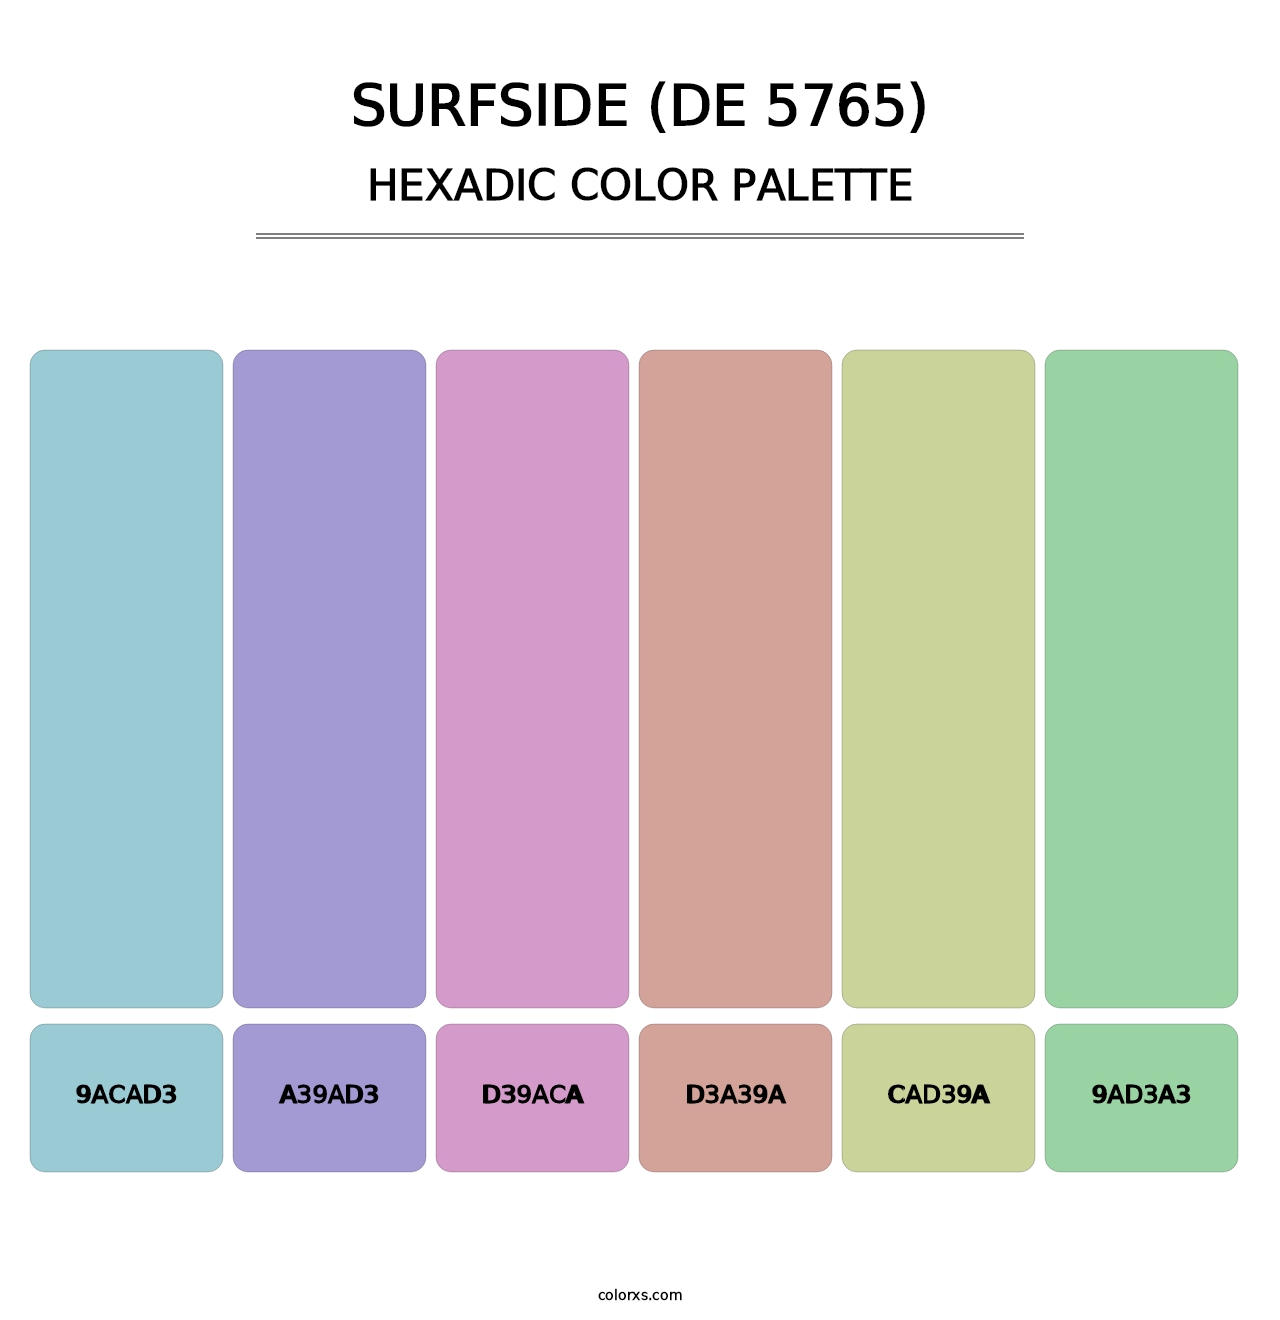 Surfside (DE 5765) - Hexadic Color Palette